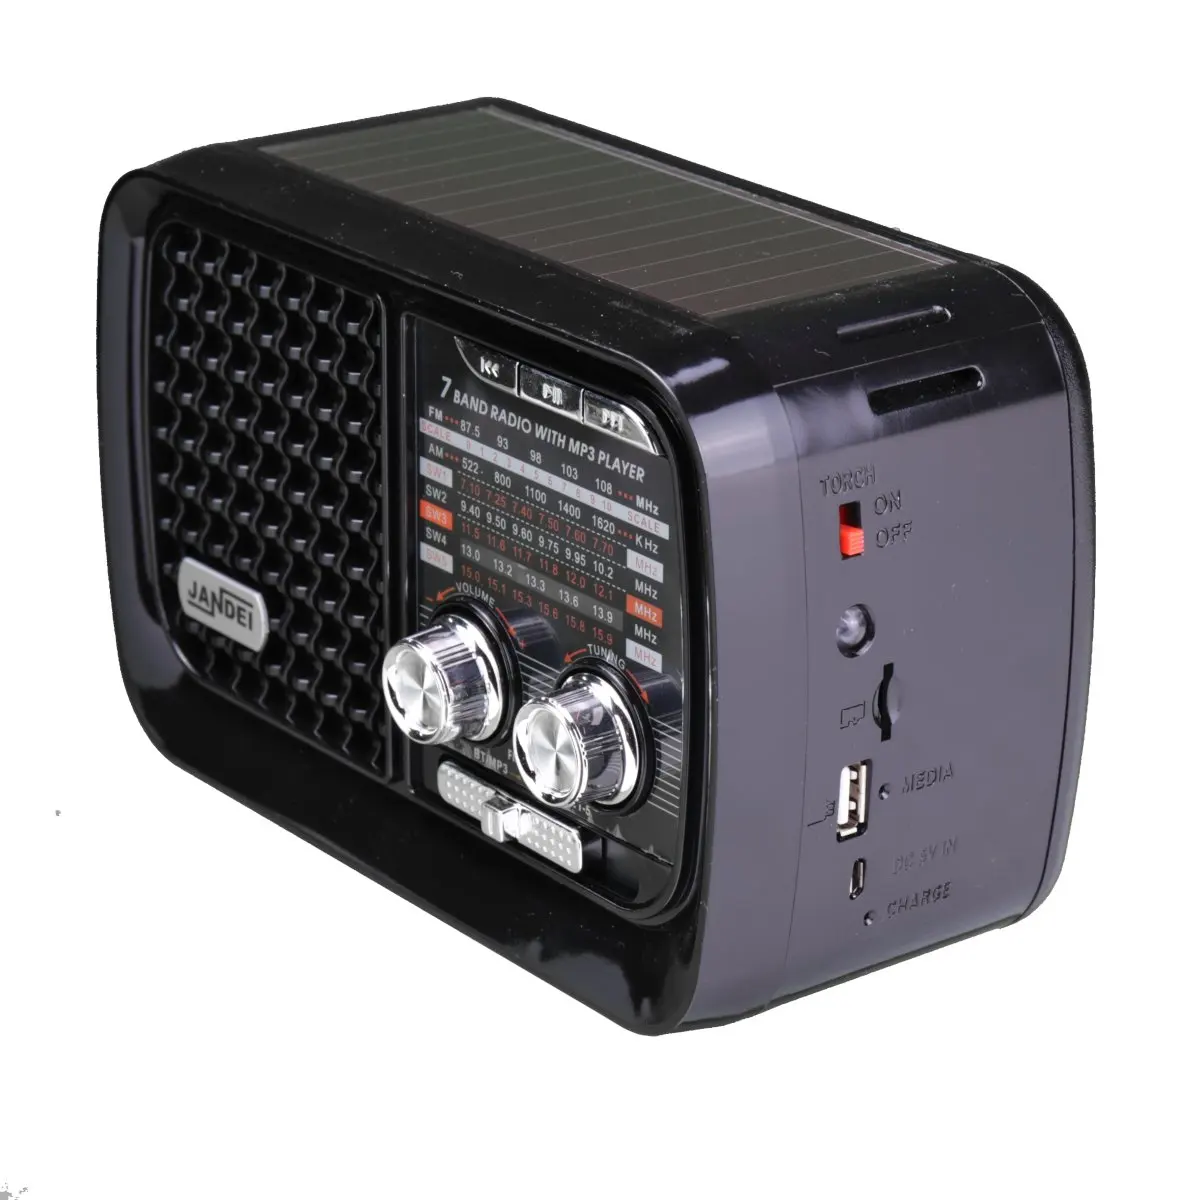 PRUNUS J-908 Am/FM Radio Portatil Pequeña Recargable, Radio Pequeña Digital  con Linterna LED, Reproductor de TF/USB/AUX /MP3, Radio Bateria Recargable